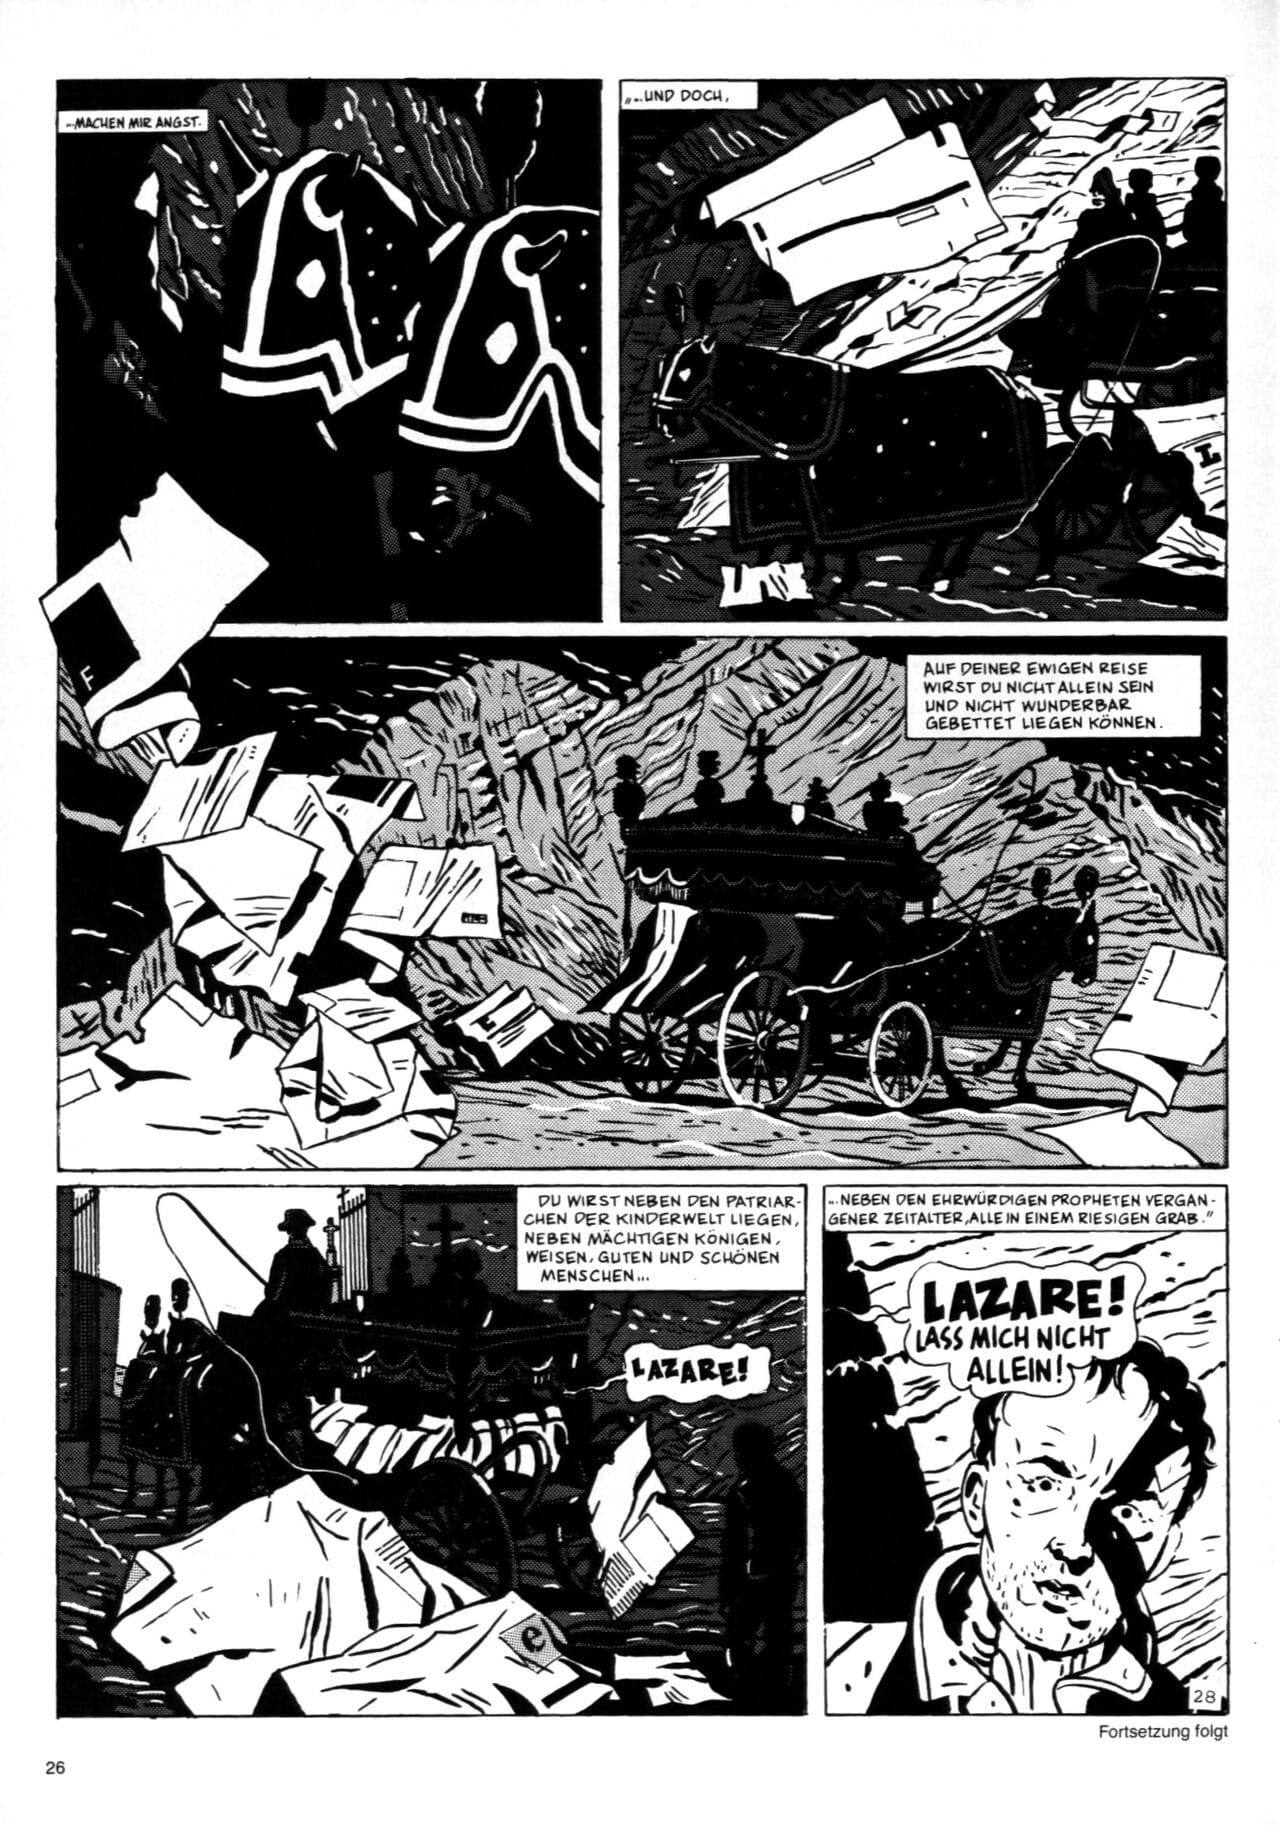 Schwermetall #095 - part 2 page 1